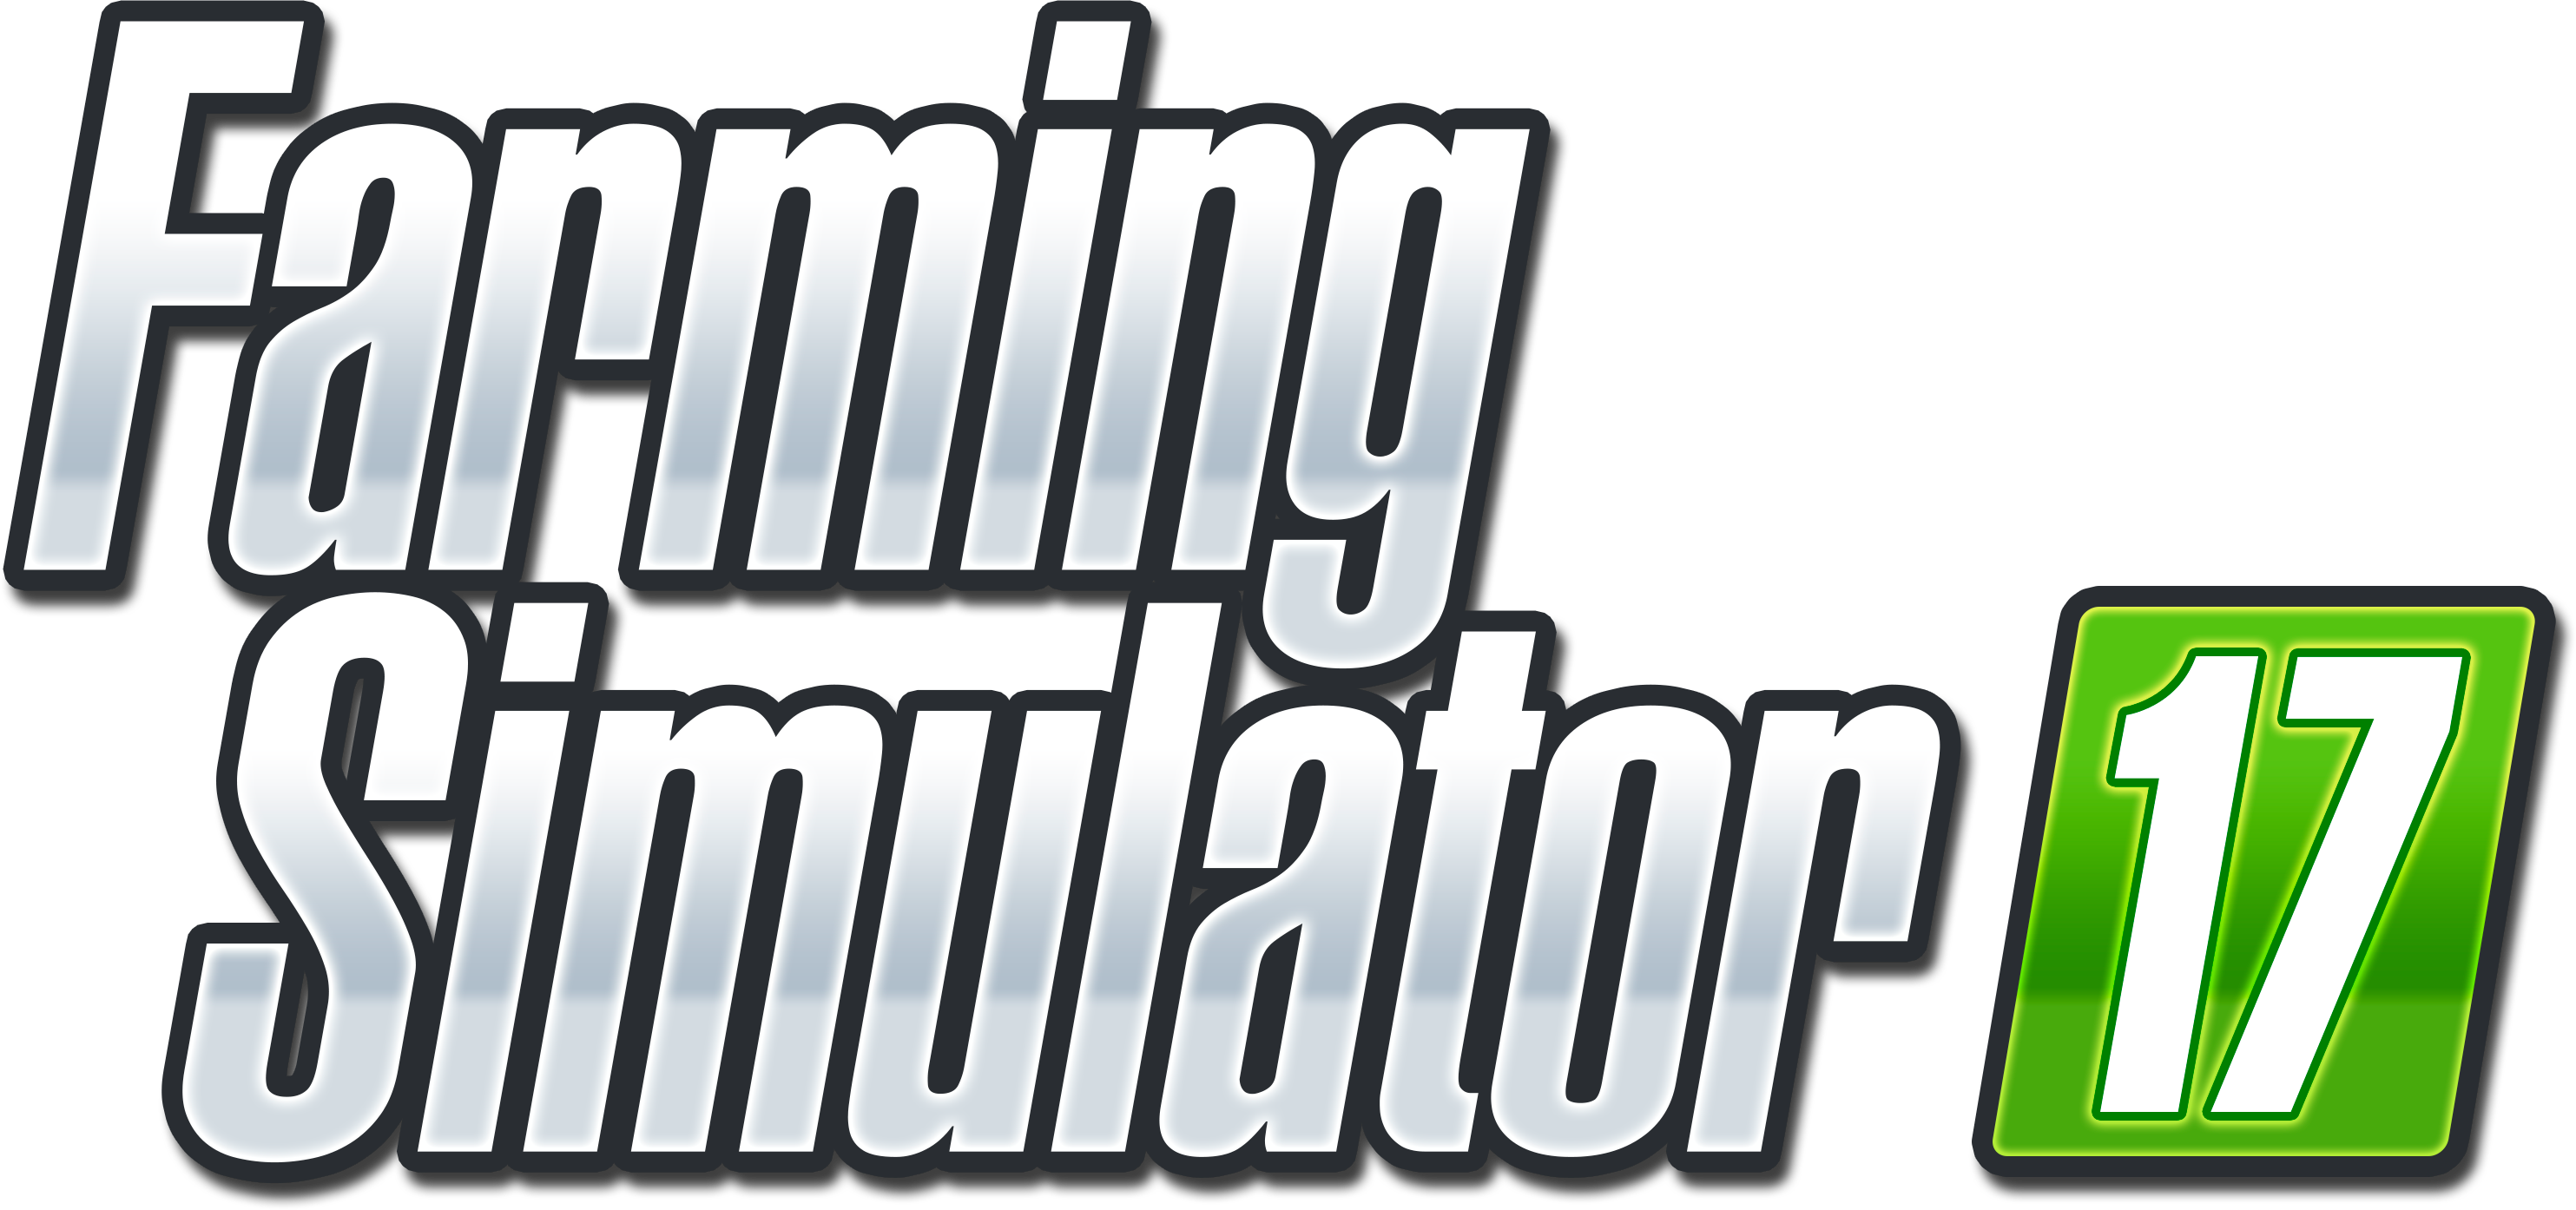 Farming Simulator 15 CD-Key S